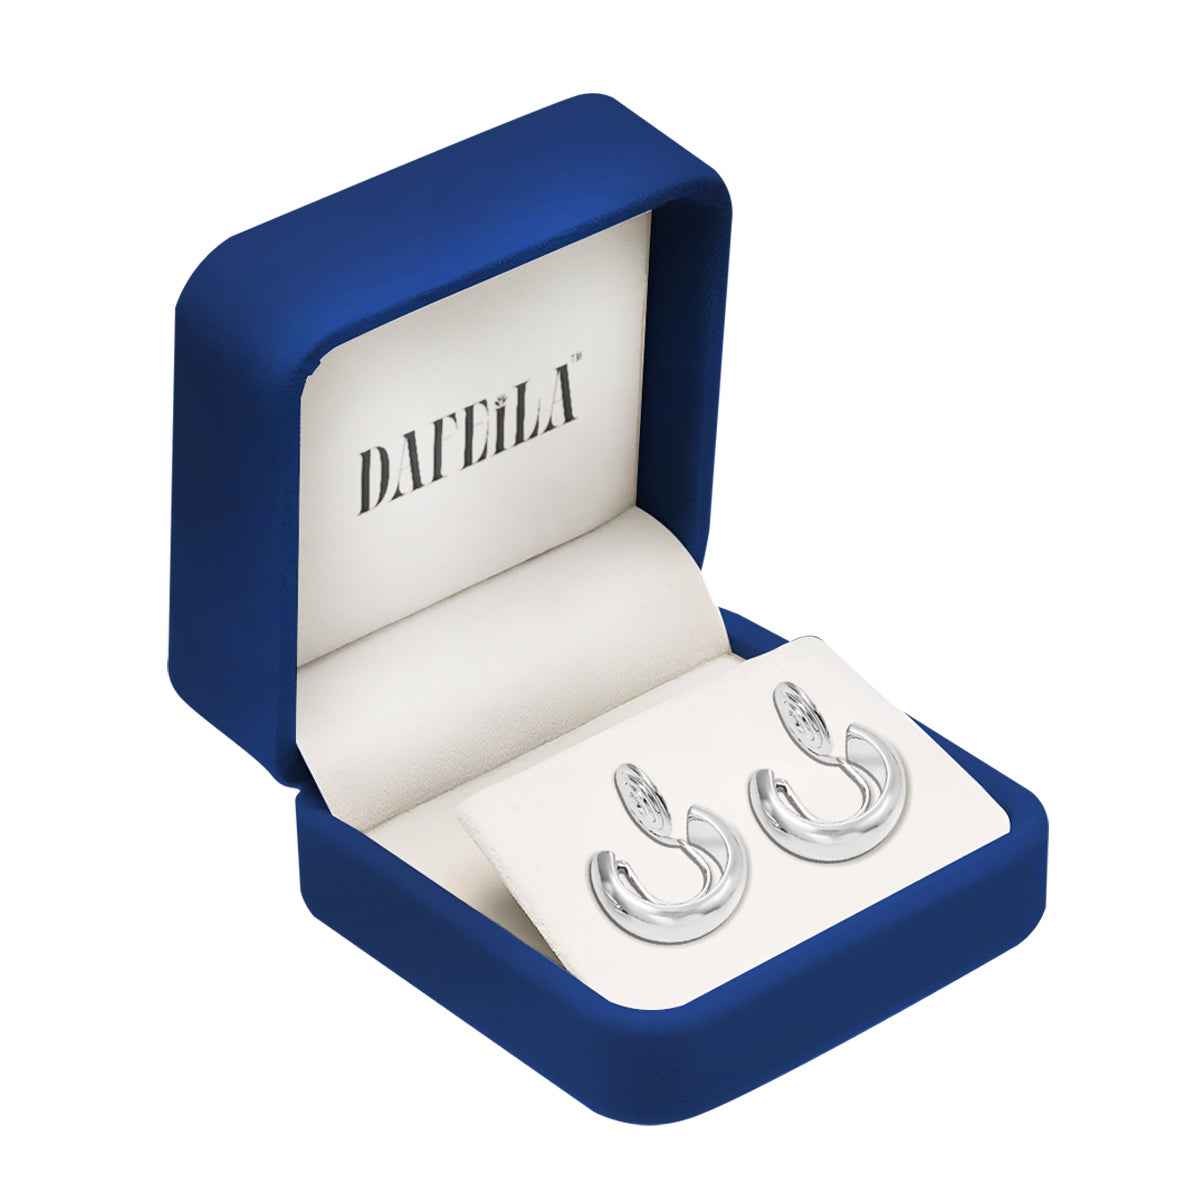 DAFEILA™ Acupressure Tinnitus Relief Earring